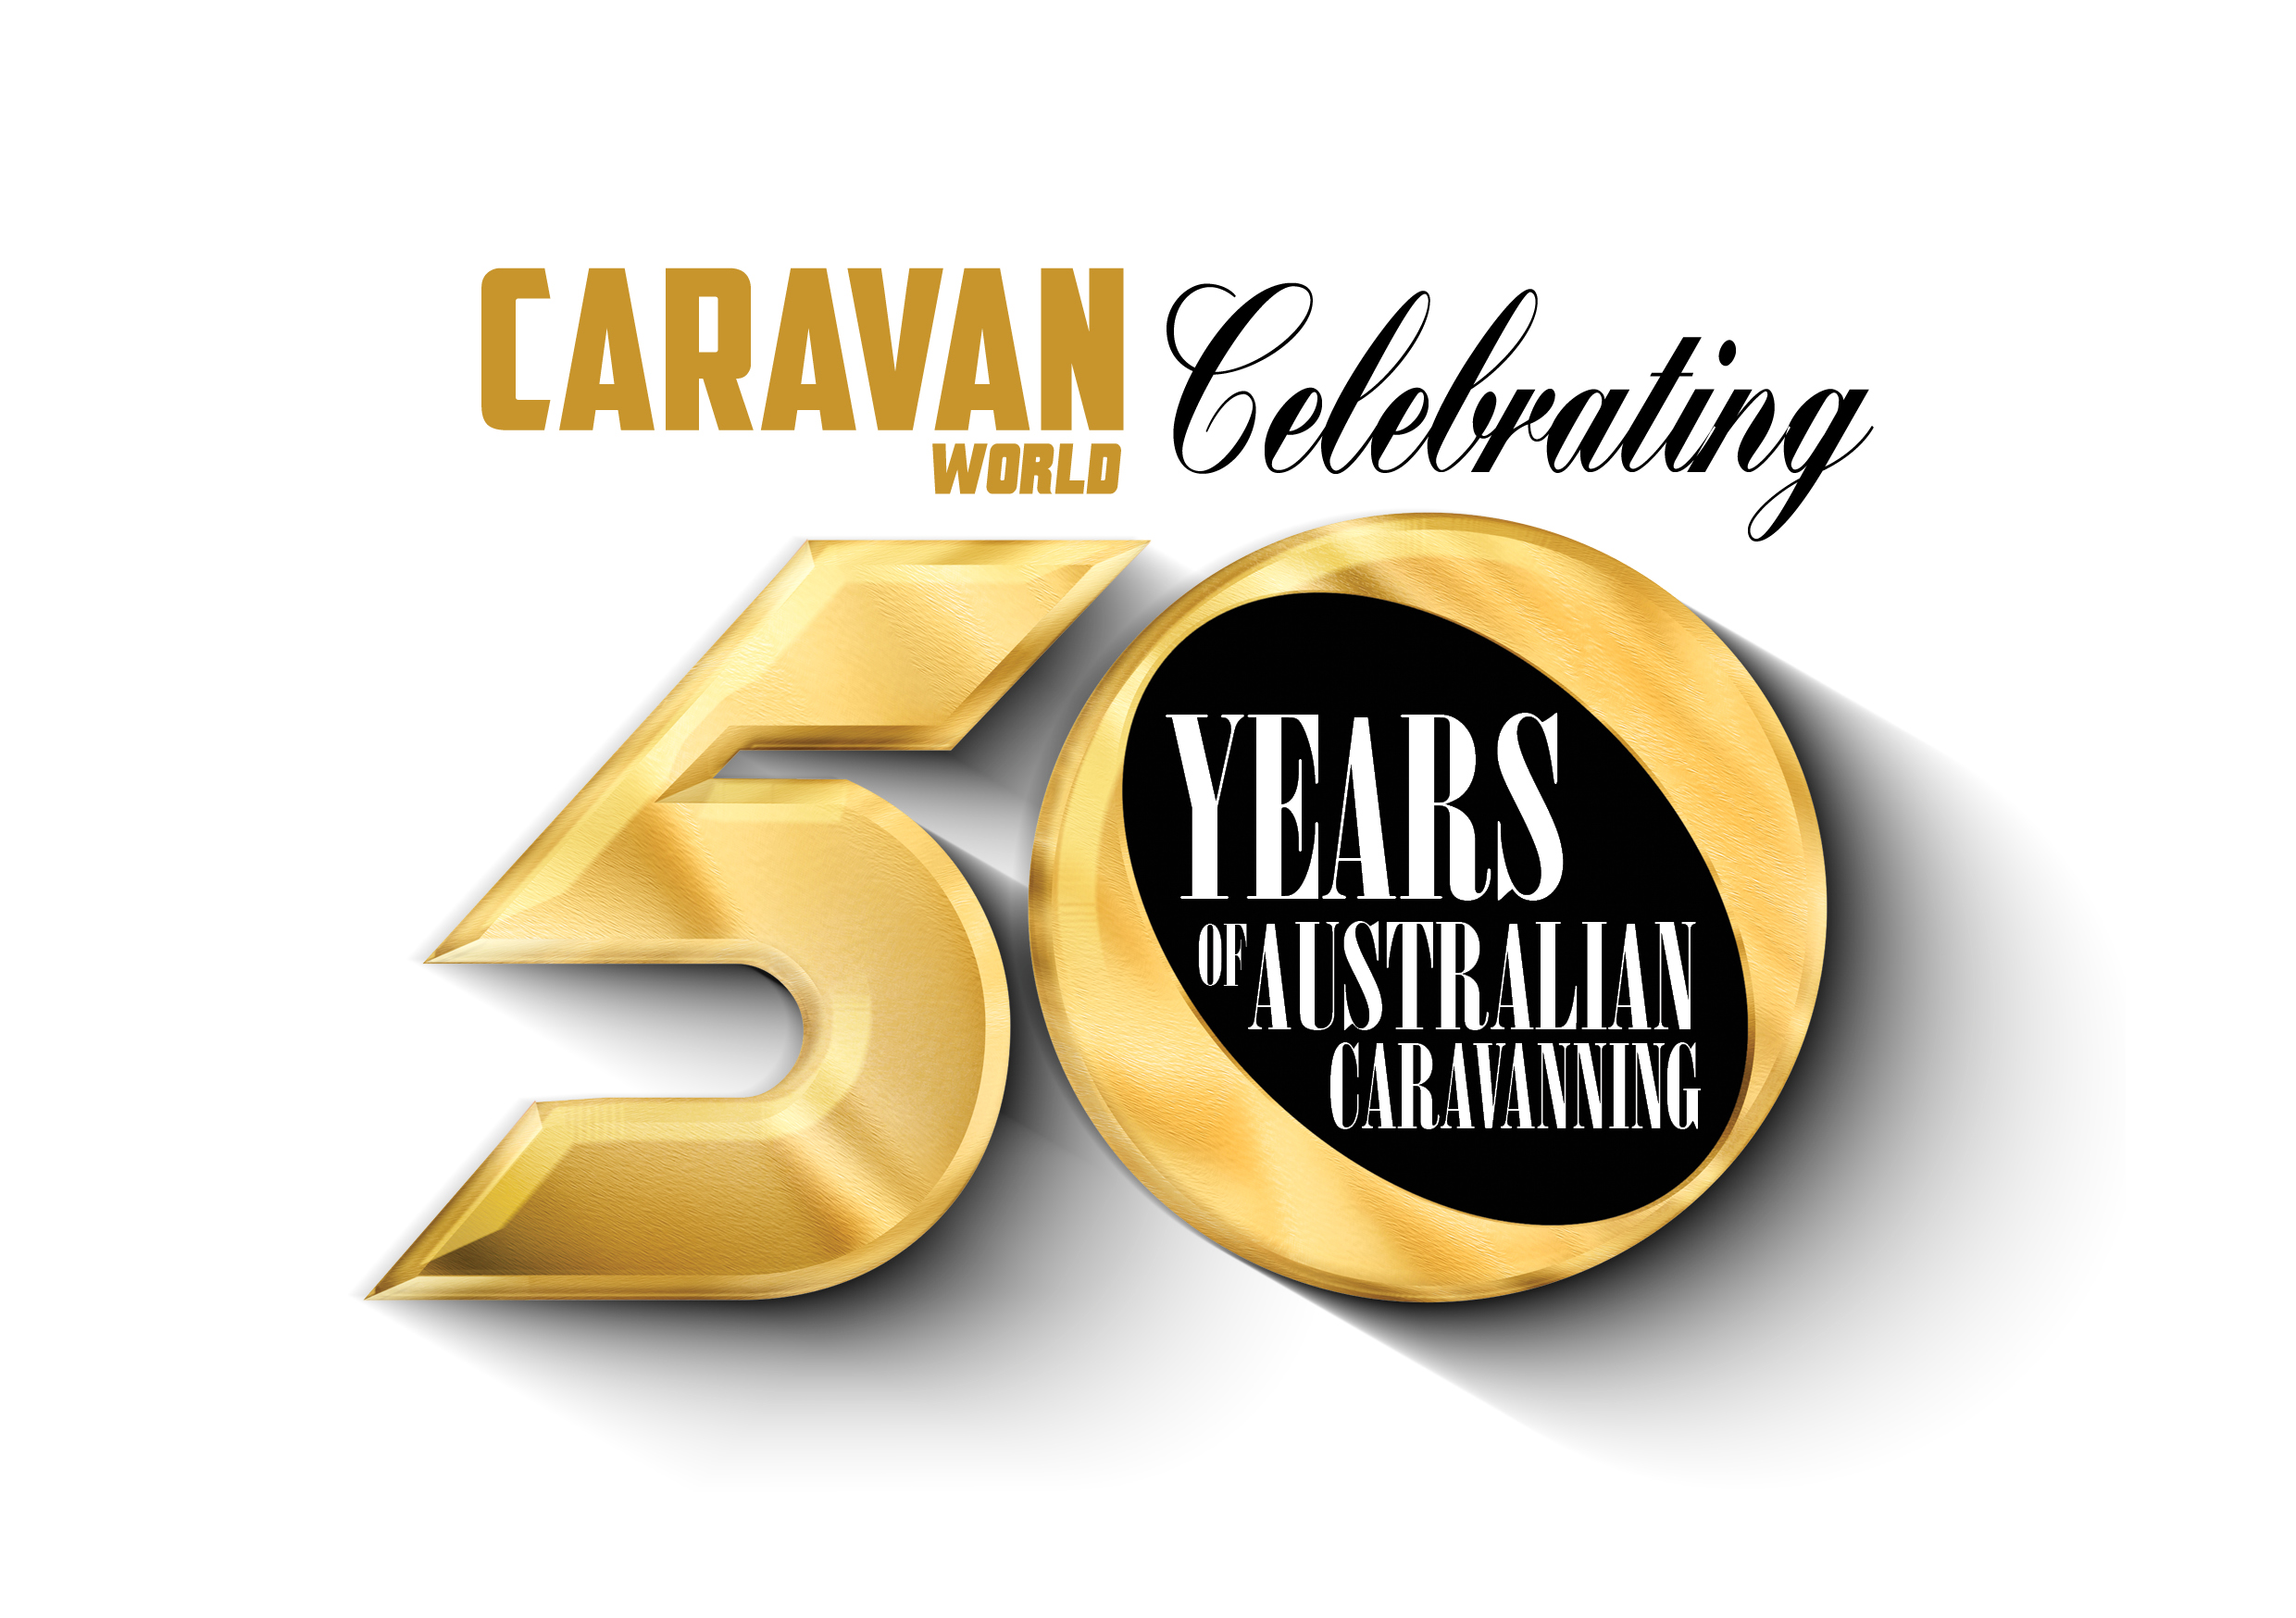 Caravan World celebrates 50 years